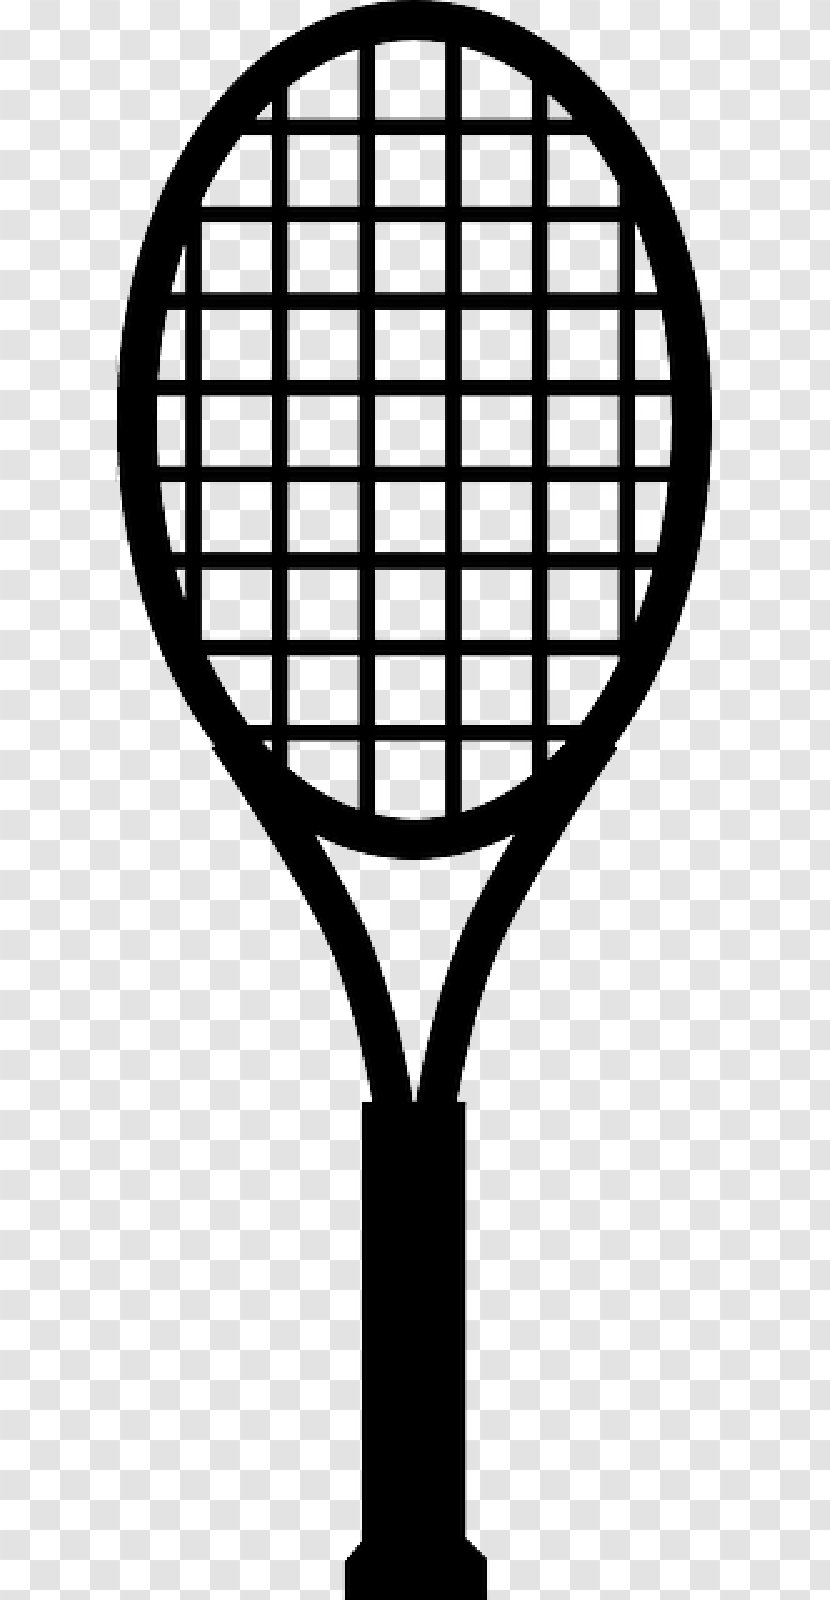 Racket Tennis Balls Clip Art Vector Graphics - Rakieta Tenisowa - Bat Outline Printable Transparent PNG